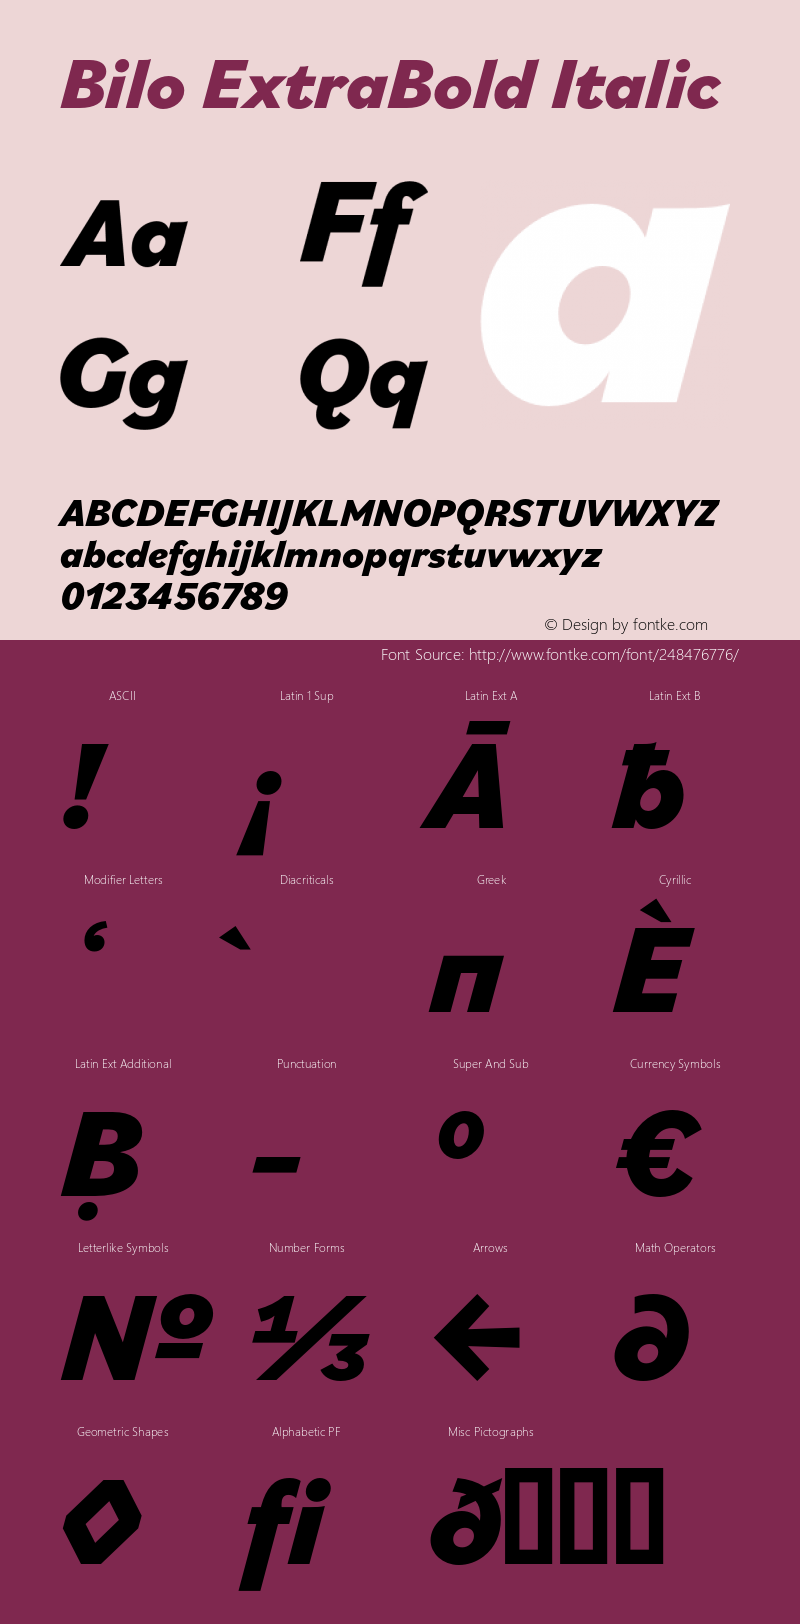 Bilo ExtraBold Italic Version 2.000图片样张